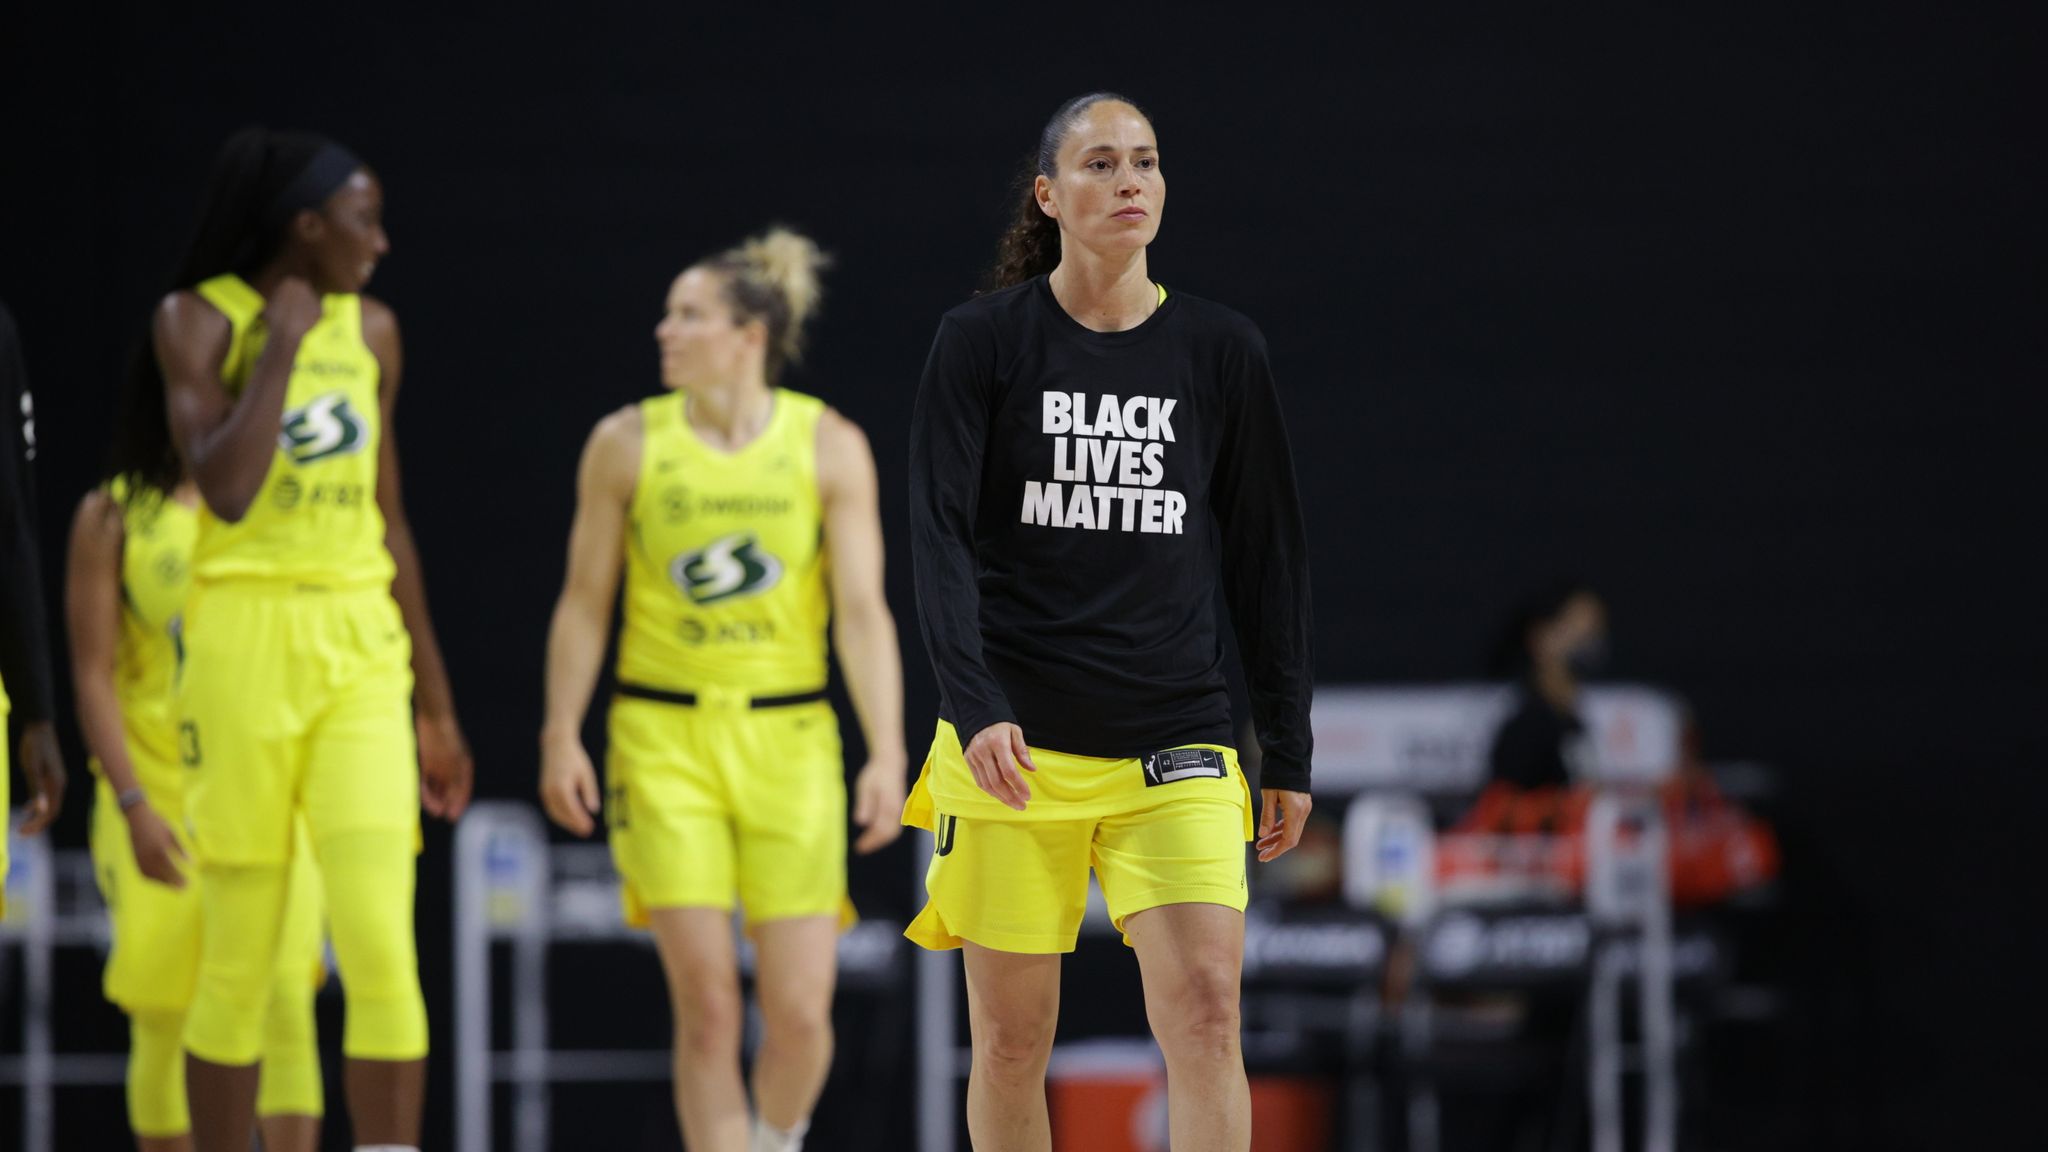 WNBA news: Late Breonna Taylor honored on 2020 WNBA jerseys